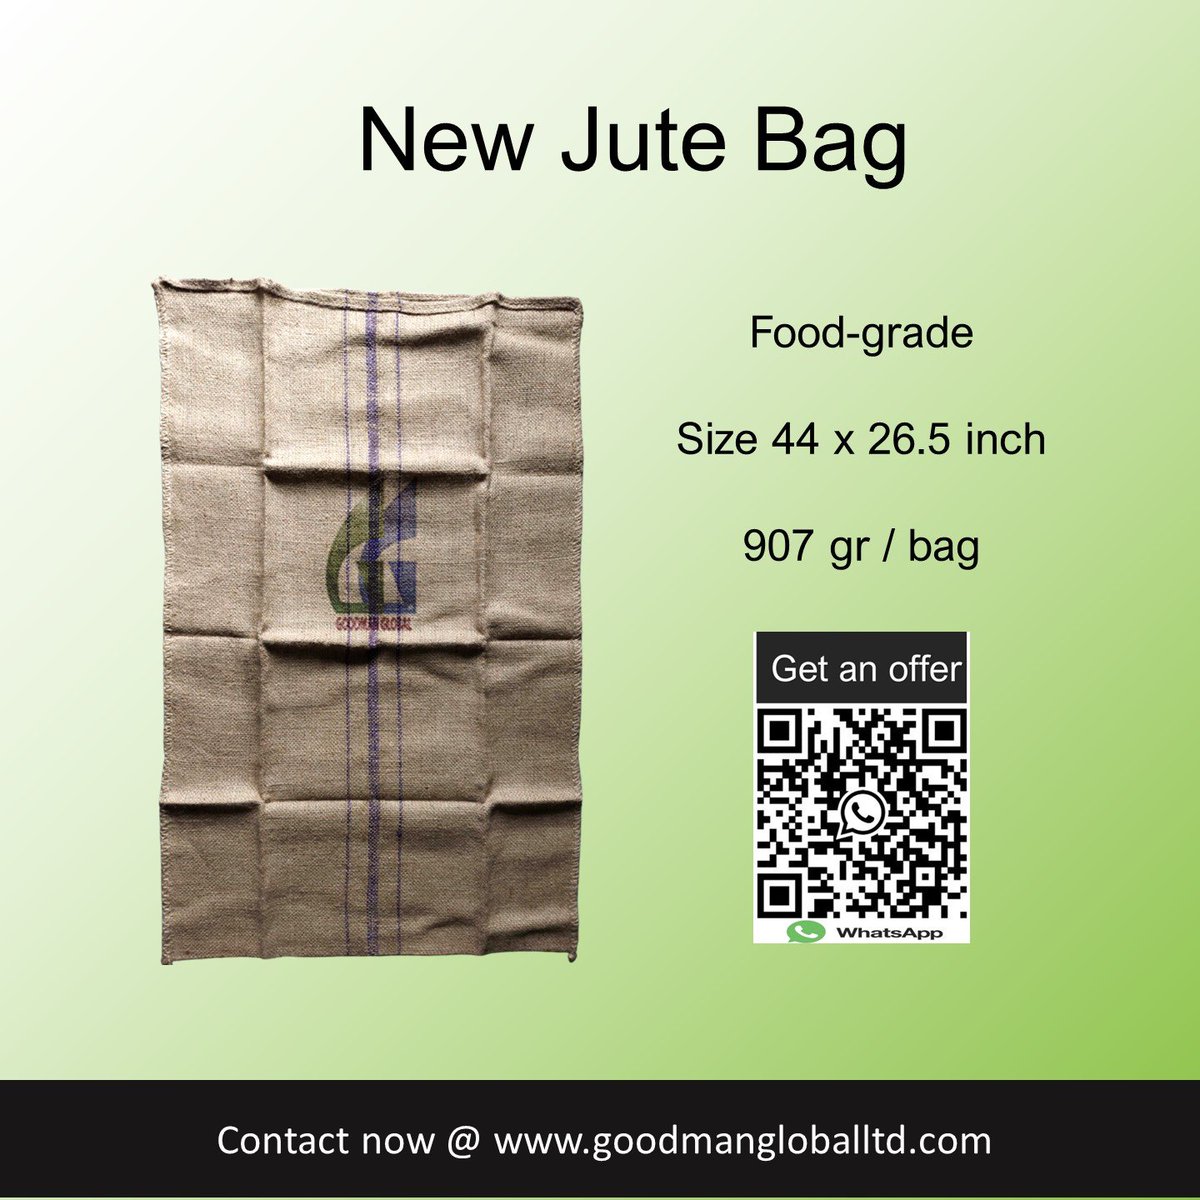 44 x 26.5 inch 907g Food-grade New Jute Bags 👉 goodmangloballtd.com 👉 @Goodman_Global

👉 Used for:

# Raw cashew nuts, coffee beans
# Copra, husked coconut, maize
# Cereals and grains packing

#jutebags #JuteSack #jutesac #juteproducts #jutebagbangladesh